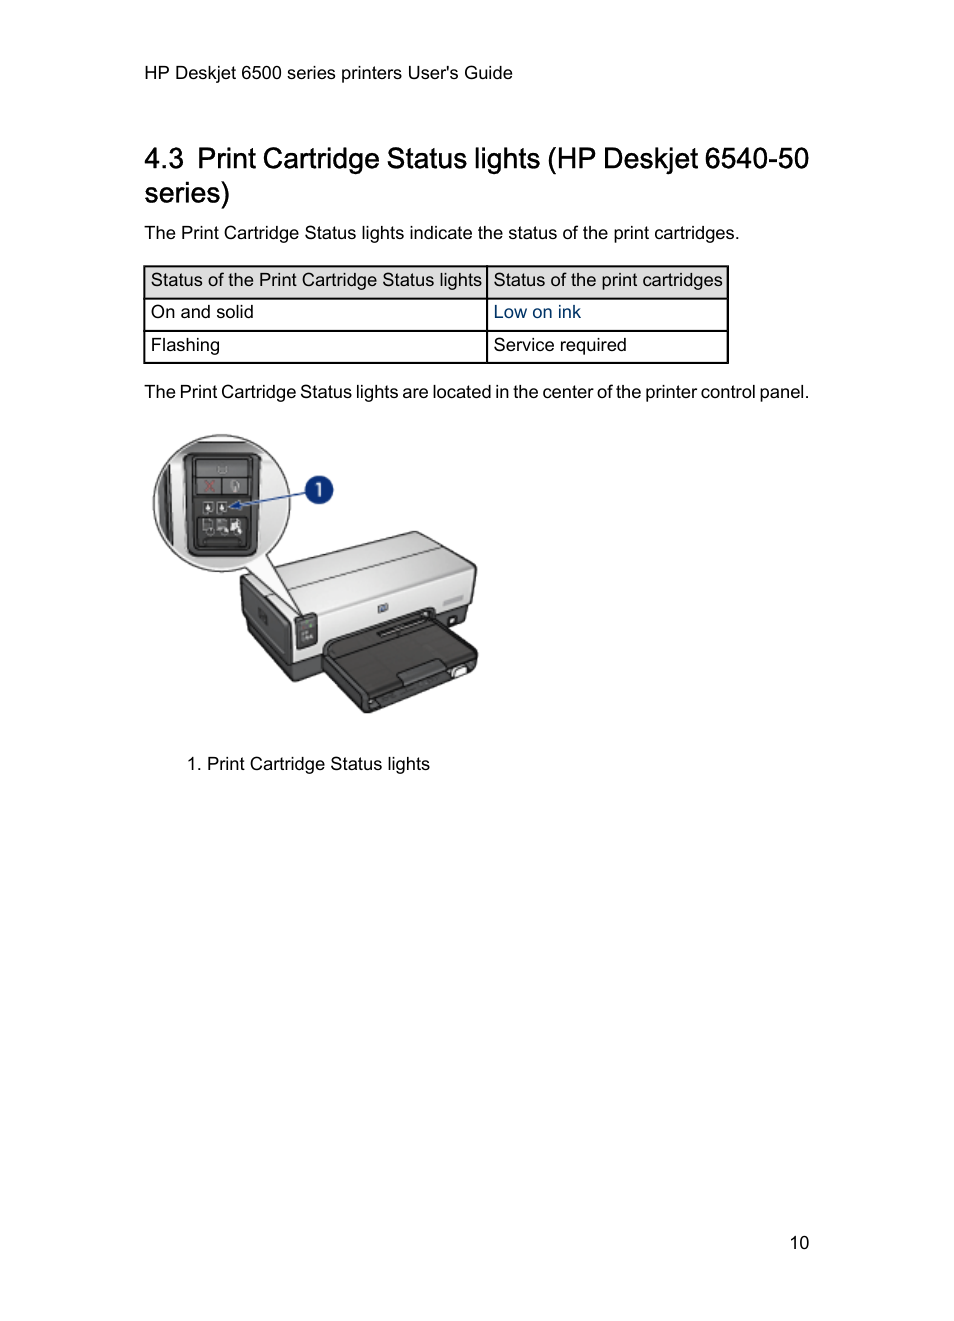 Print cartridge status lights, And a | HP Deskjet 6540 Color Inkjet Printer  User Manual | Page 10 / 195